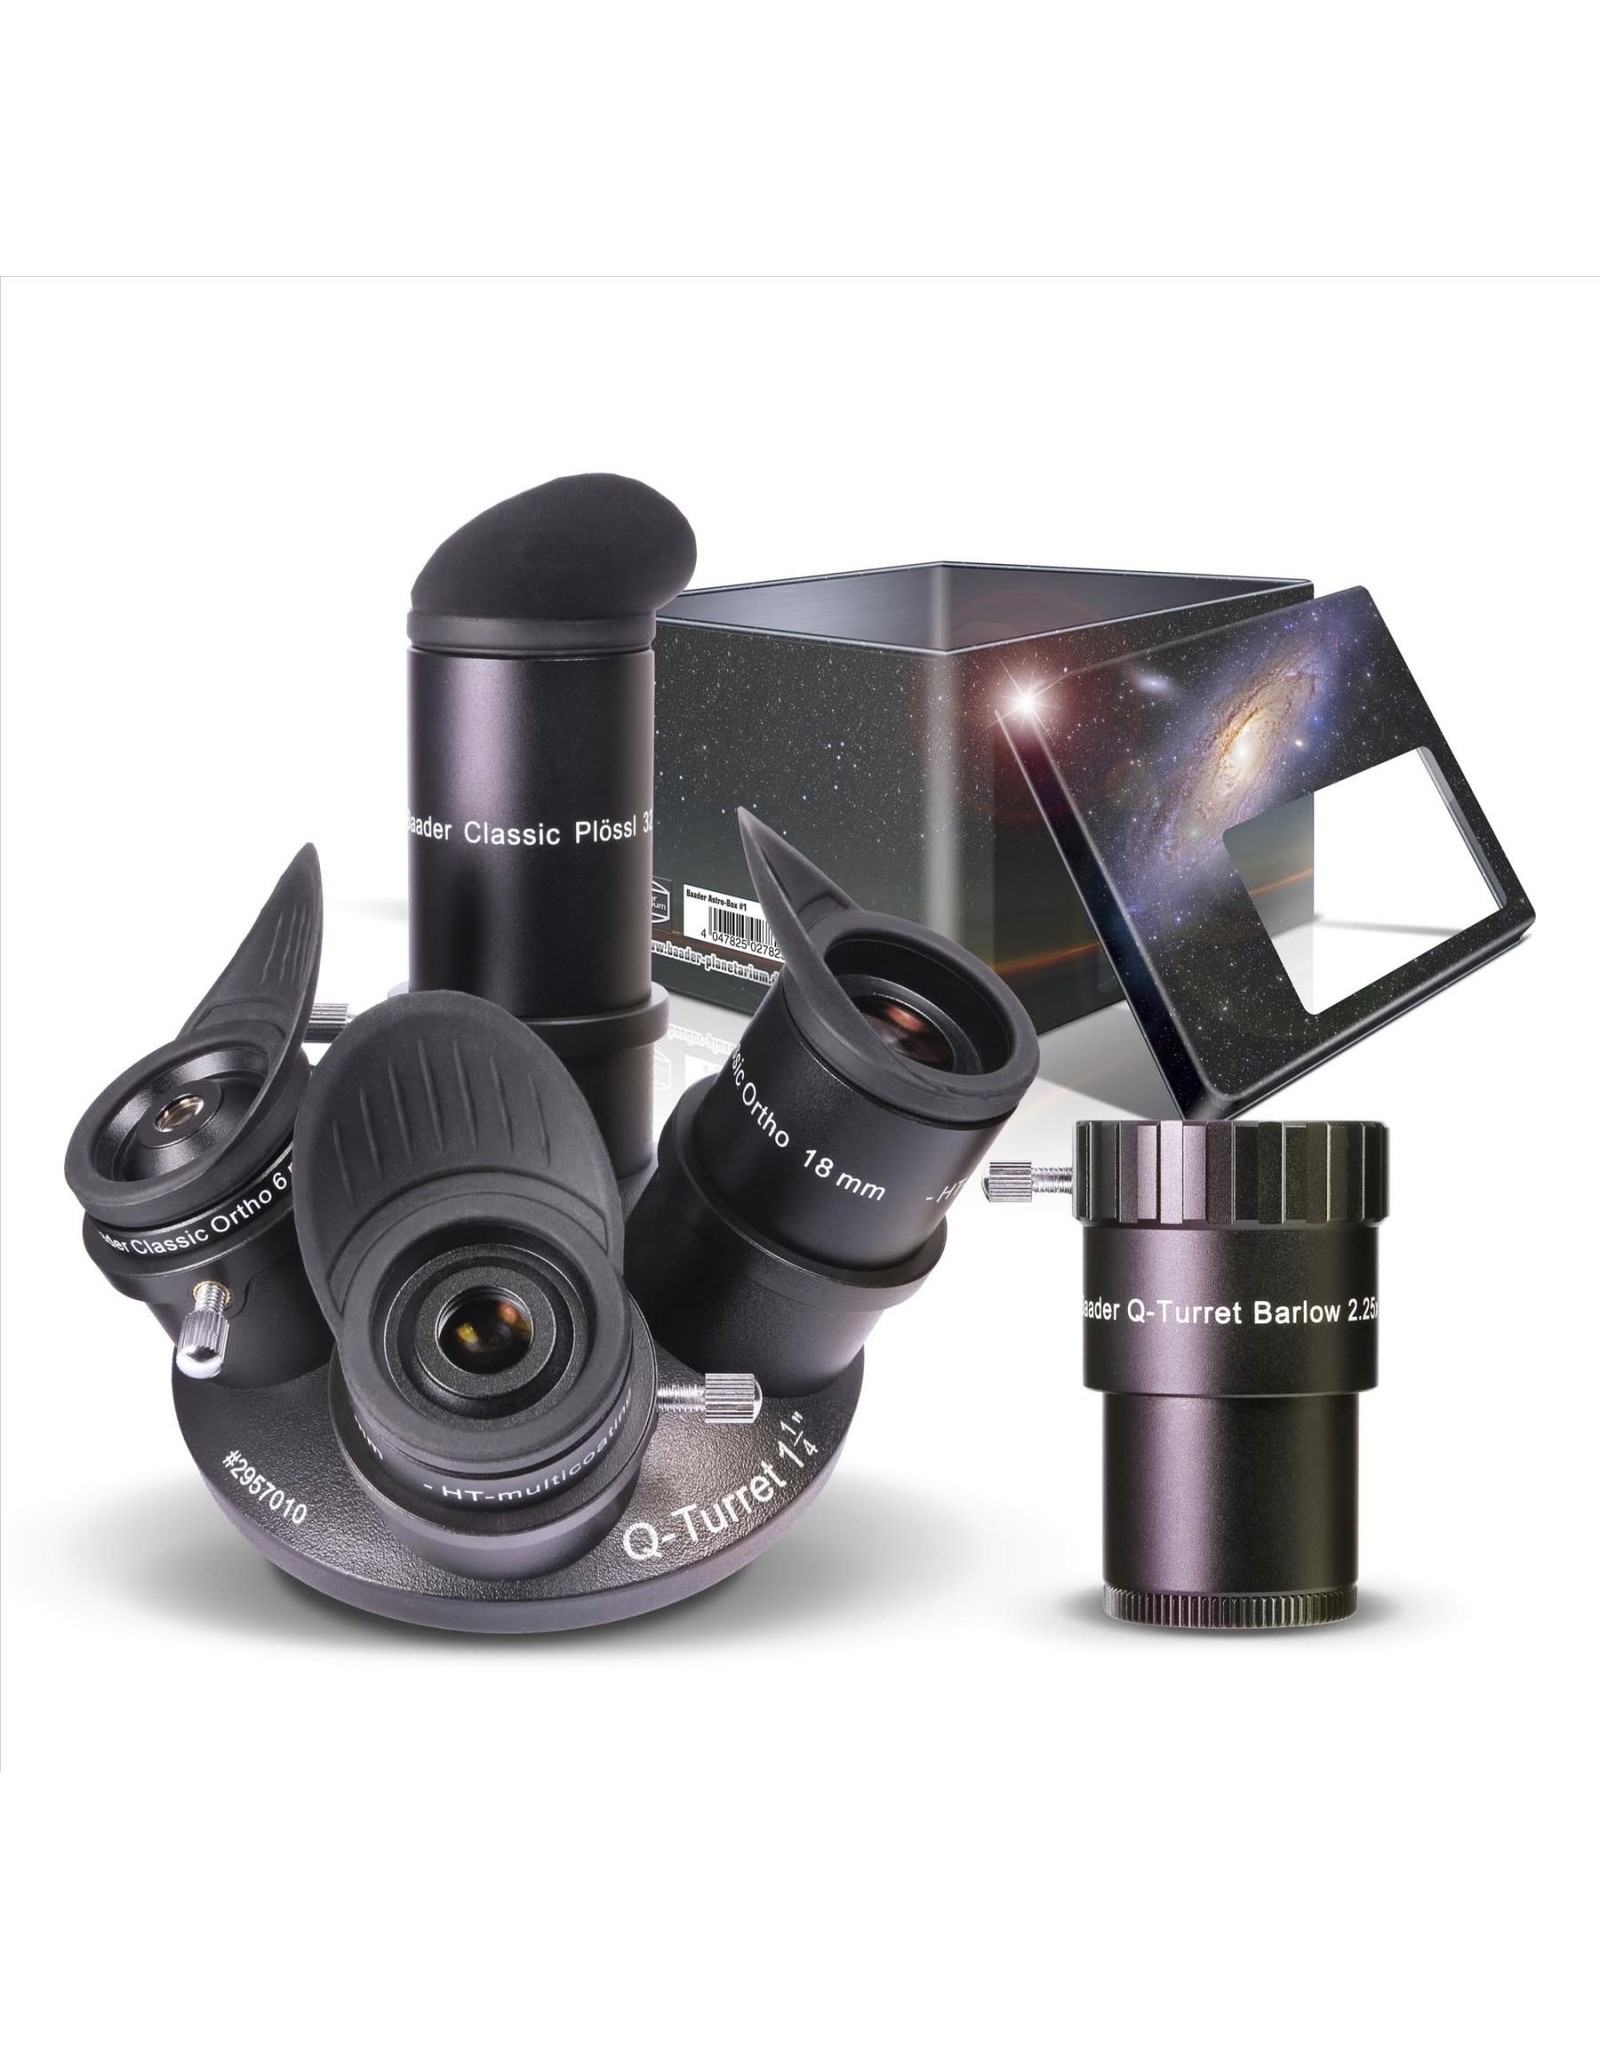 Baader Planetarium Baader Q-Turret Eyepiece Set (Eyepiece Revolver, 4x Classic Ortho, 1x Q-Barlow 2.25x)